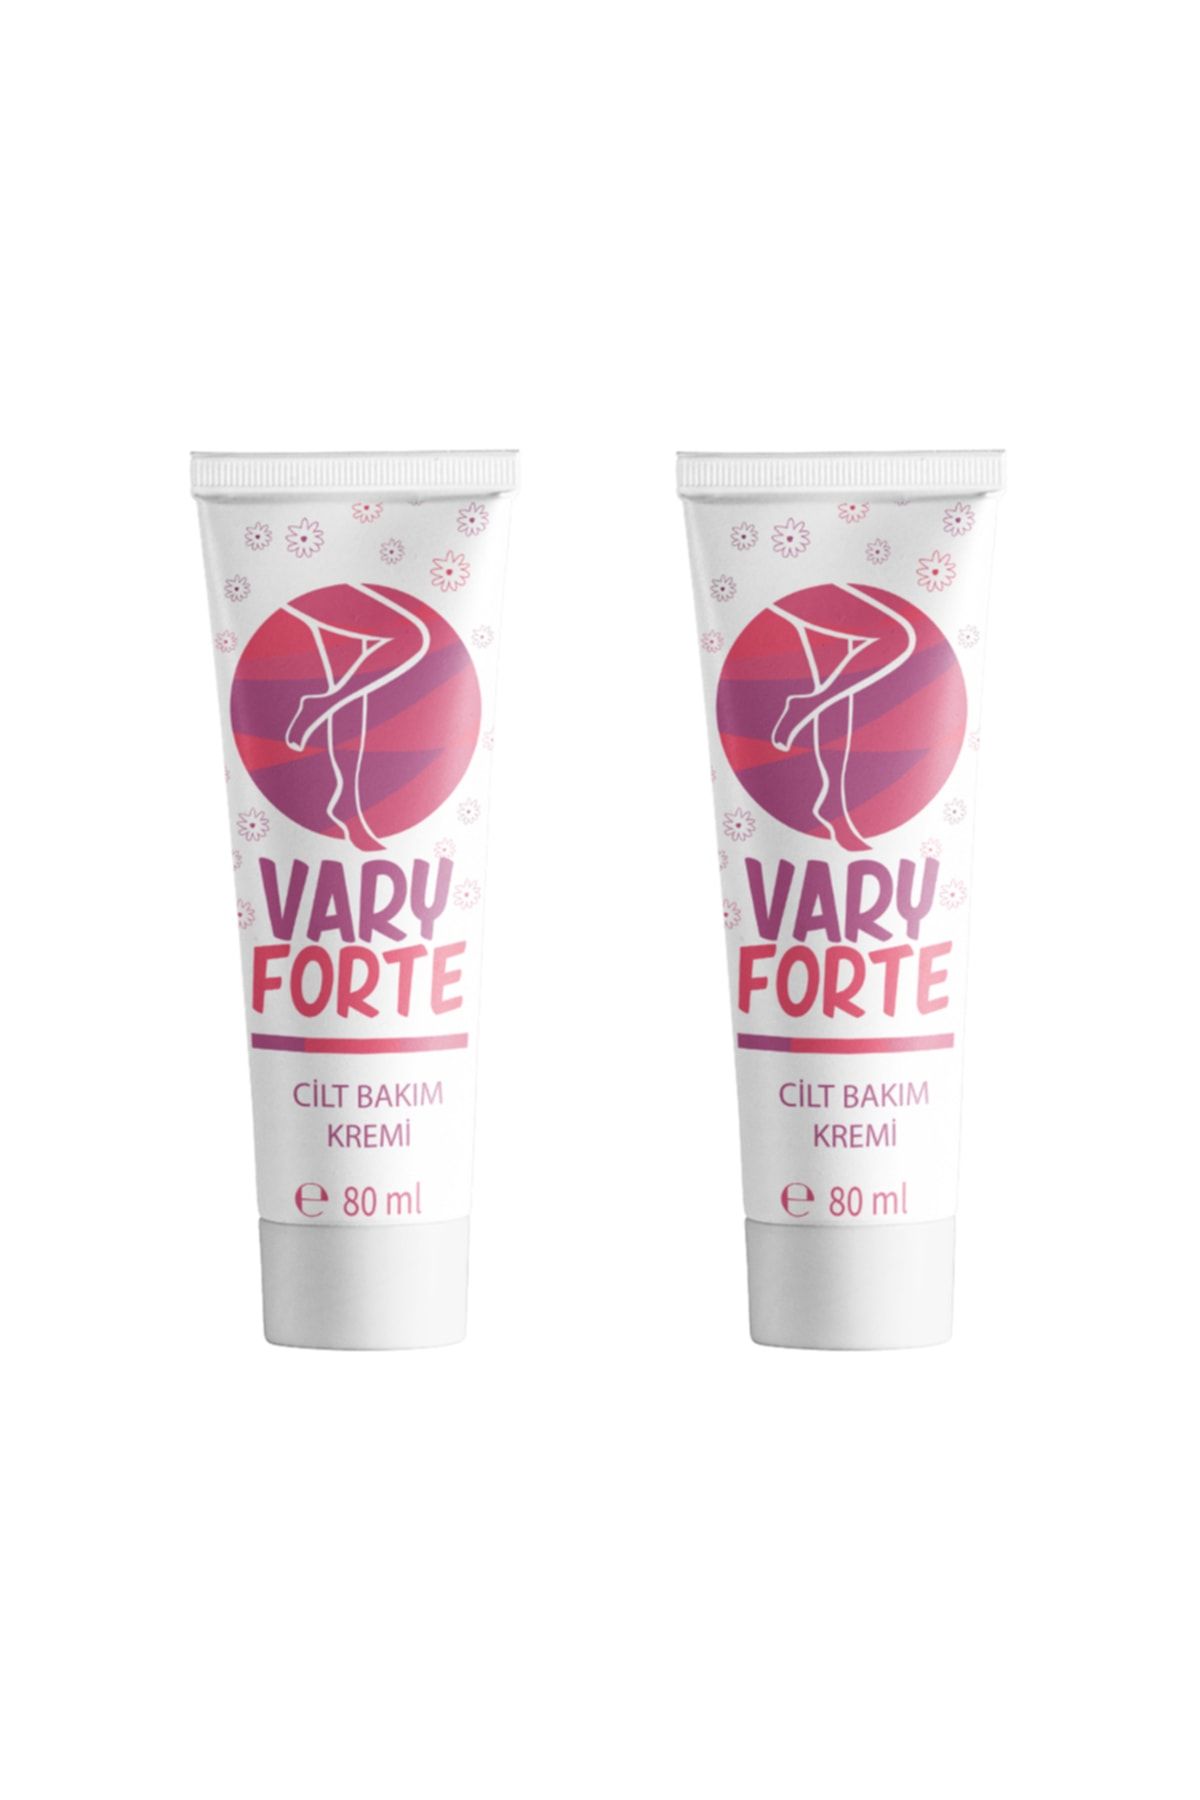 Vary Forte Varis Rahatlatıcı Krem 80 ml 2 Adet